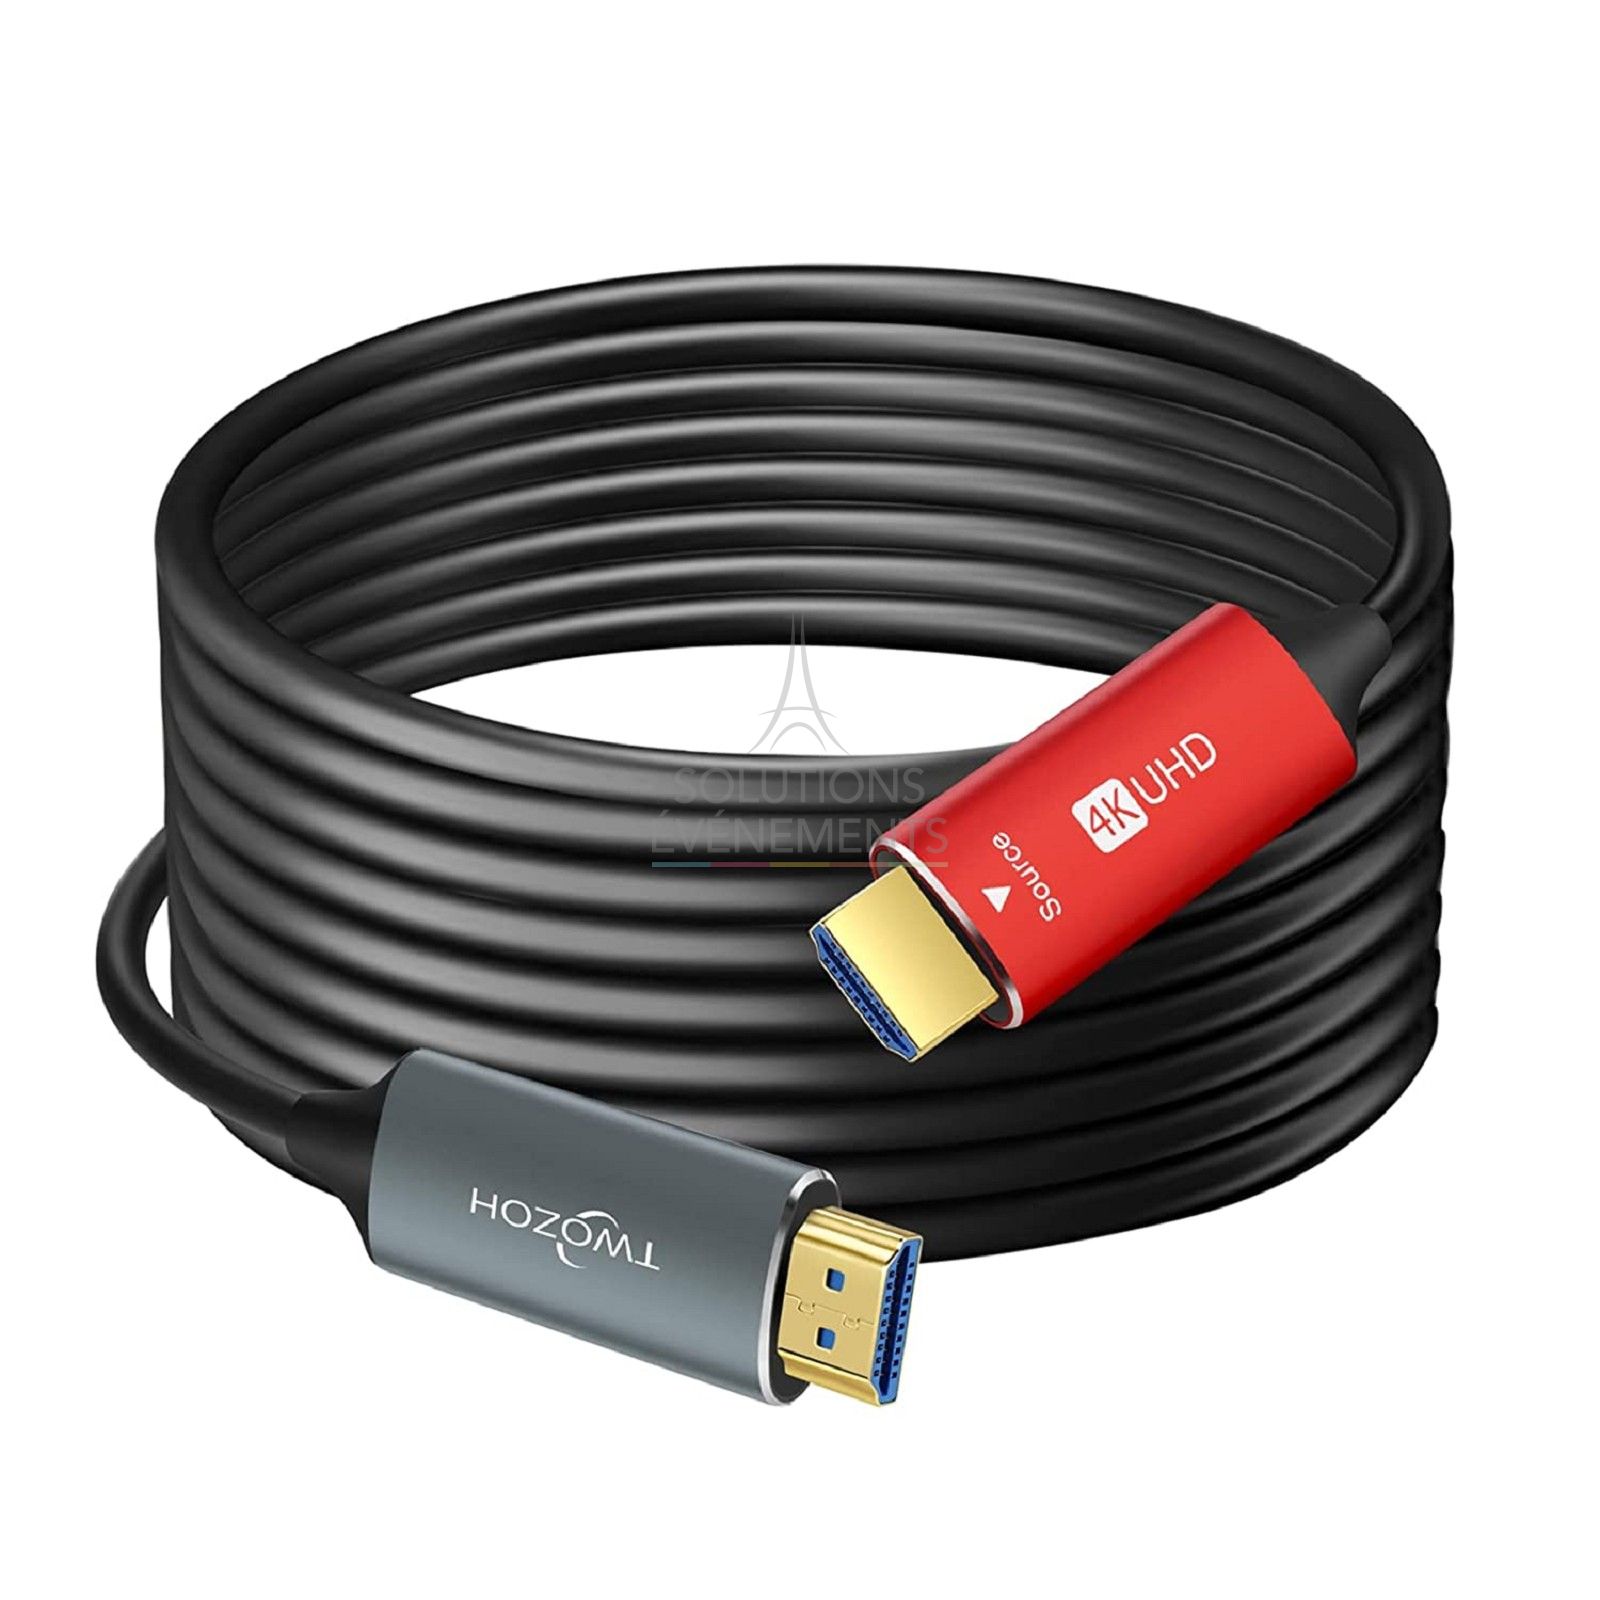 Location de cable HDMI de 30m en fibre optique compatible 4K/3D